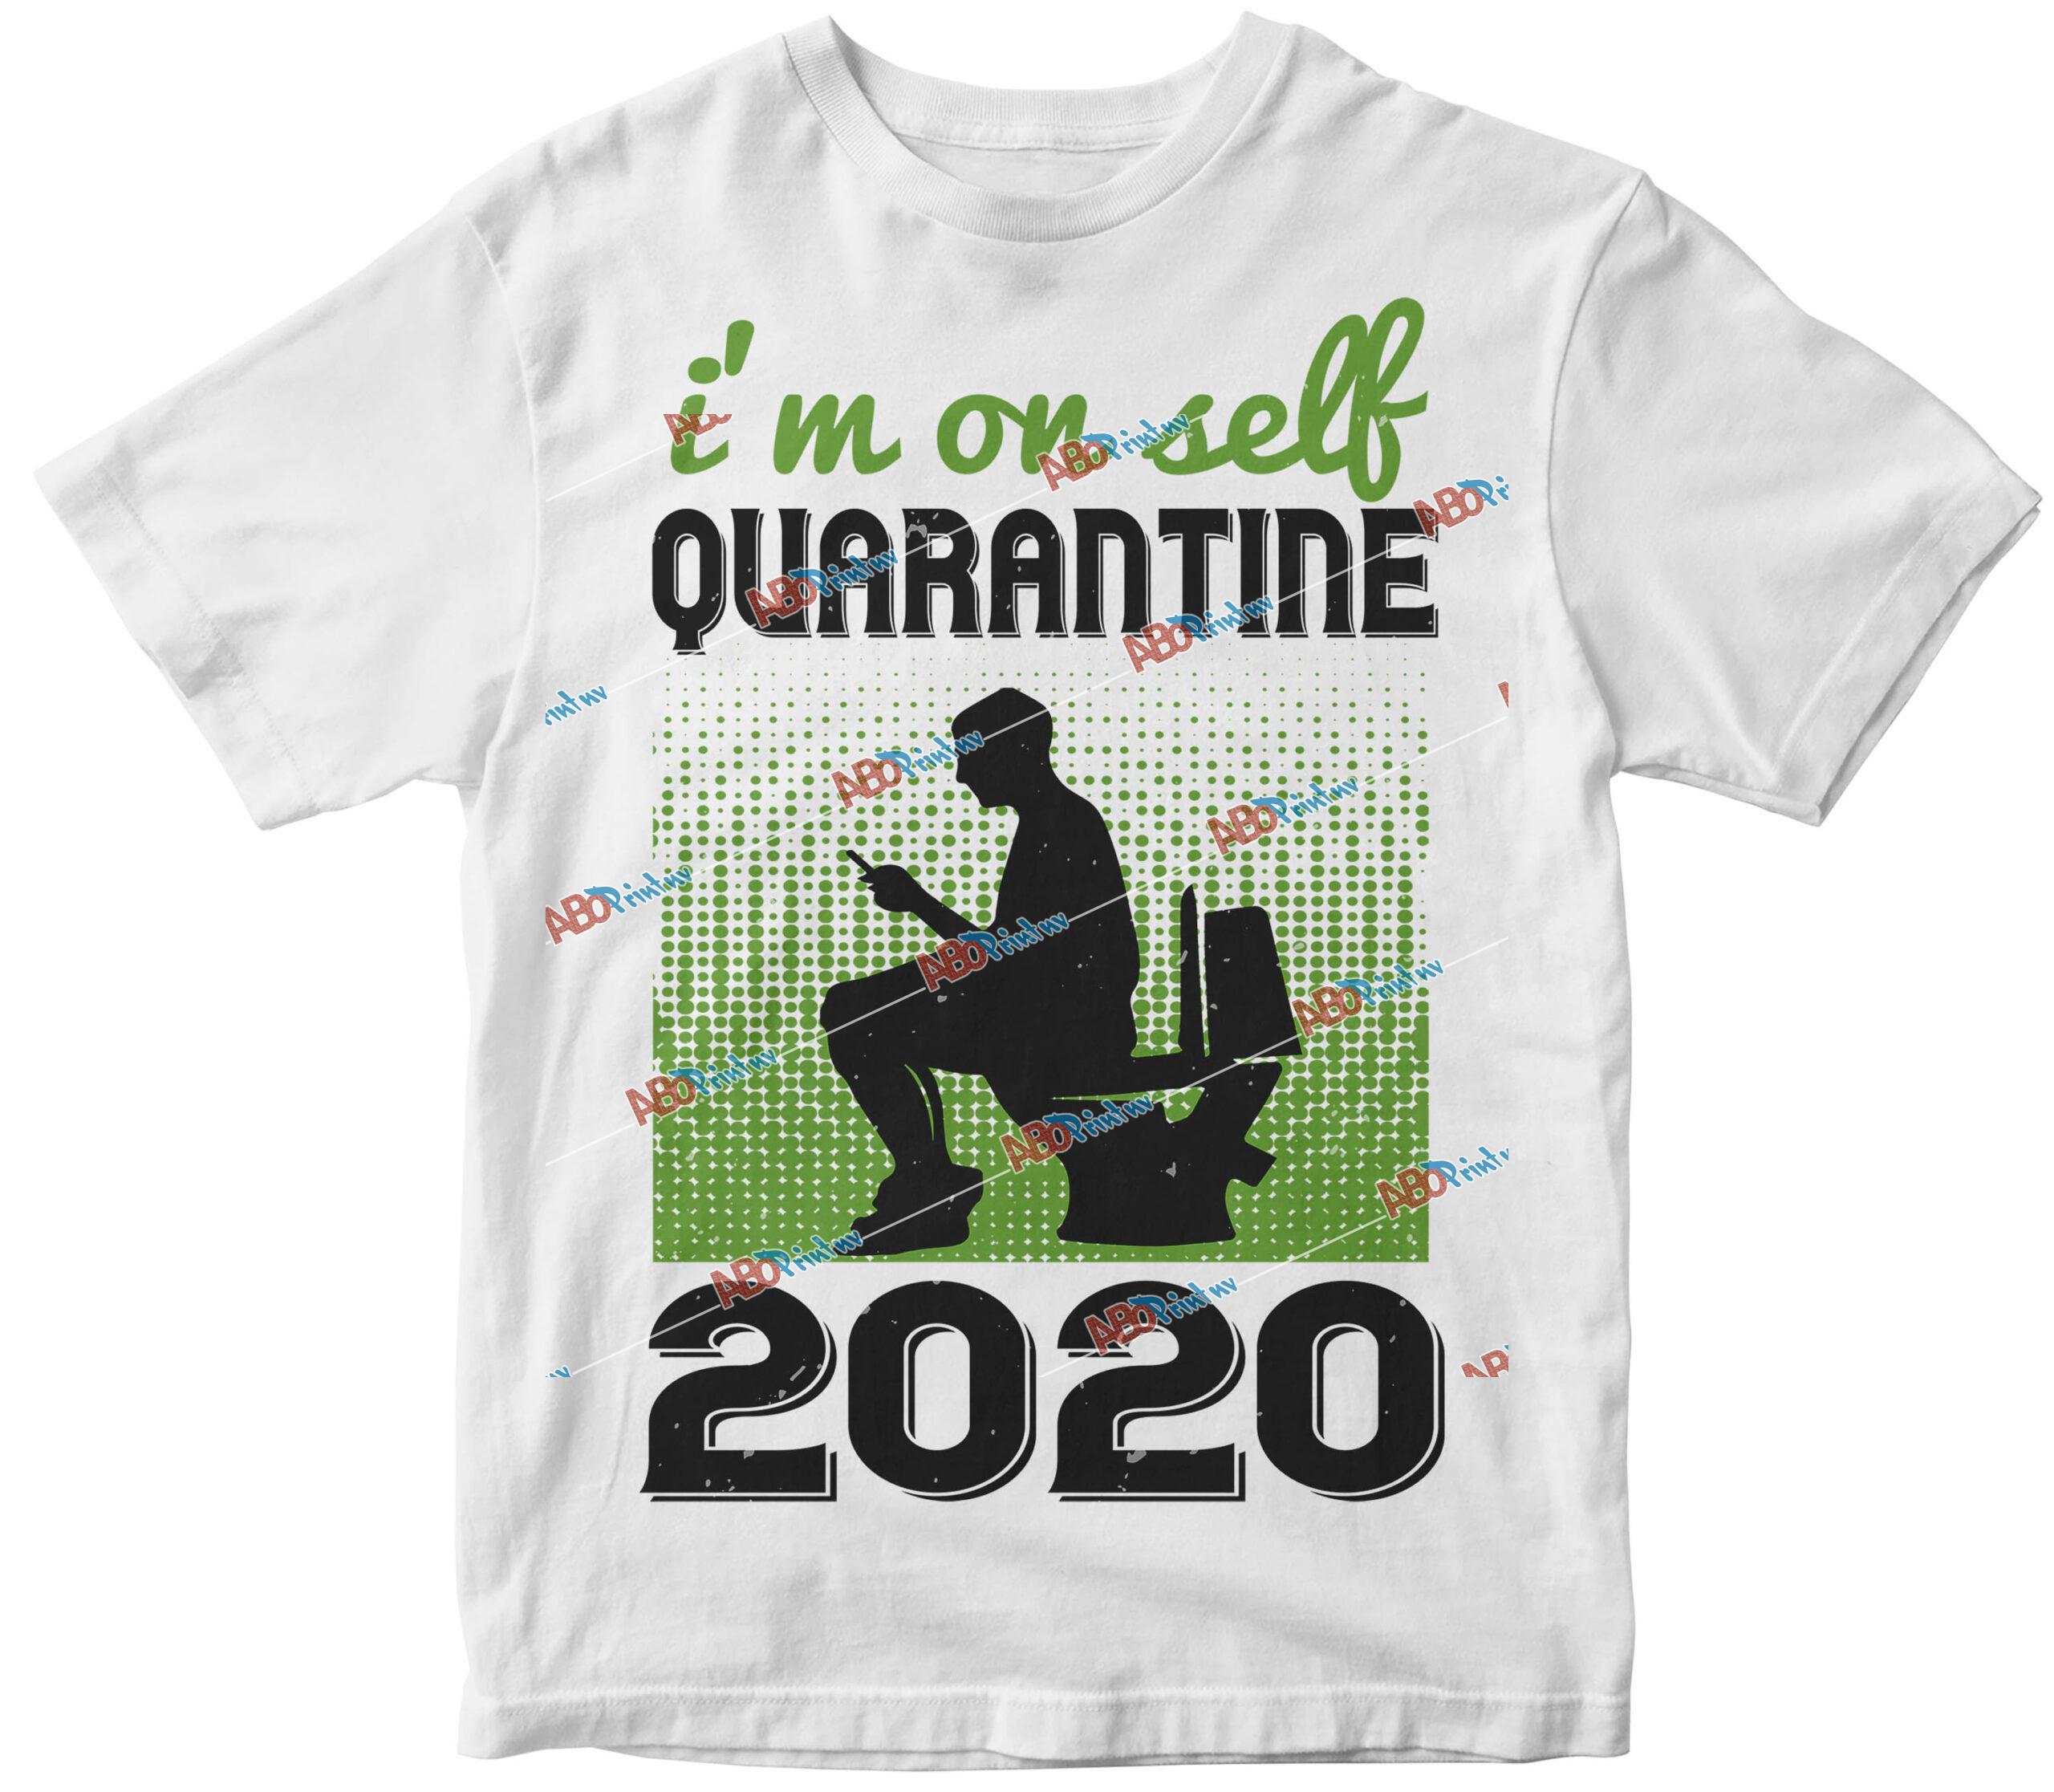 i'm on self quarantine 2020.jpg